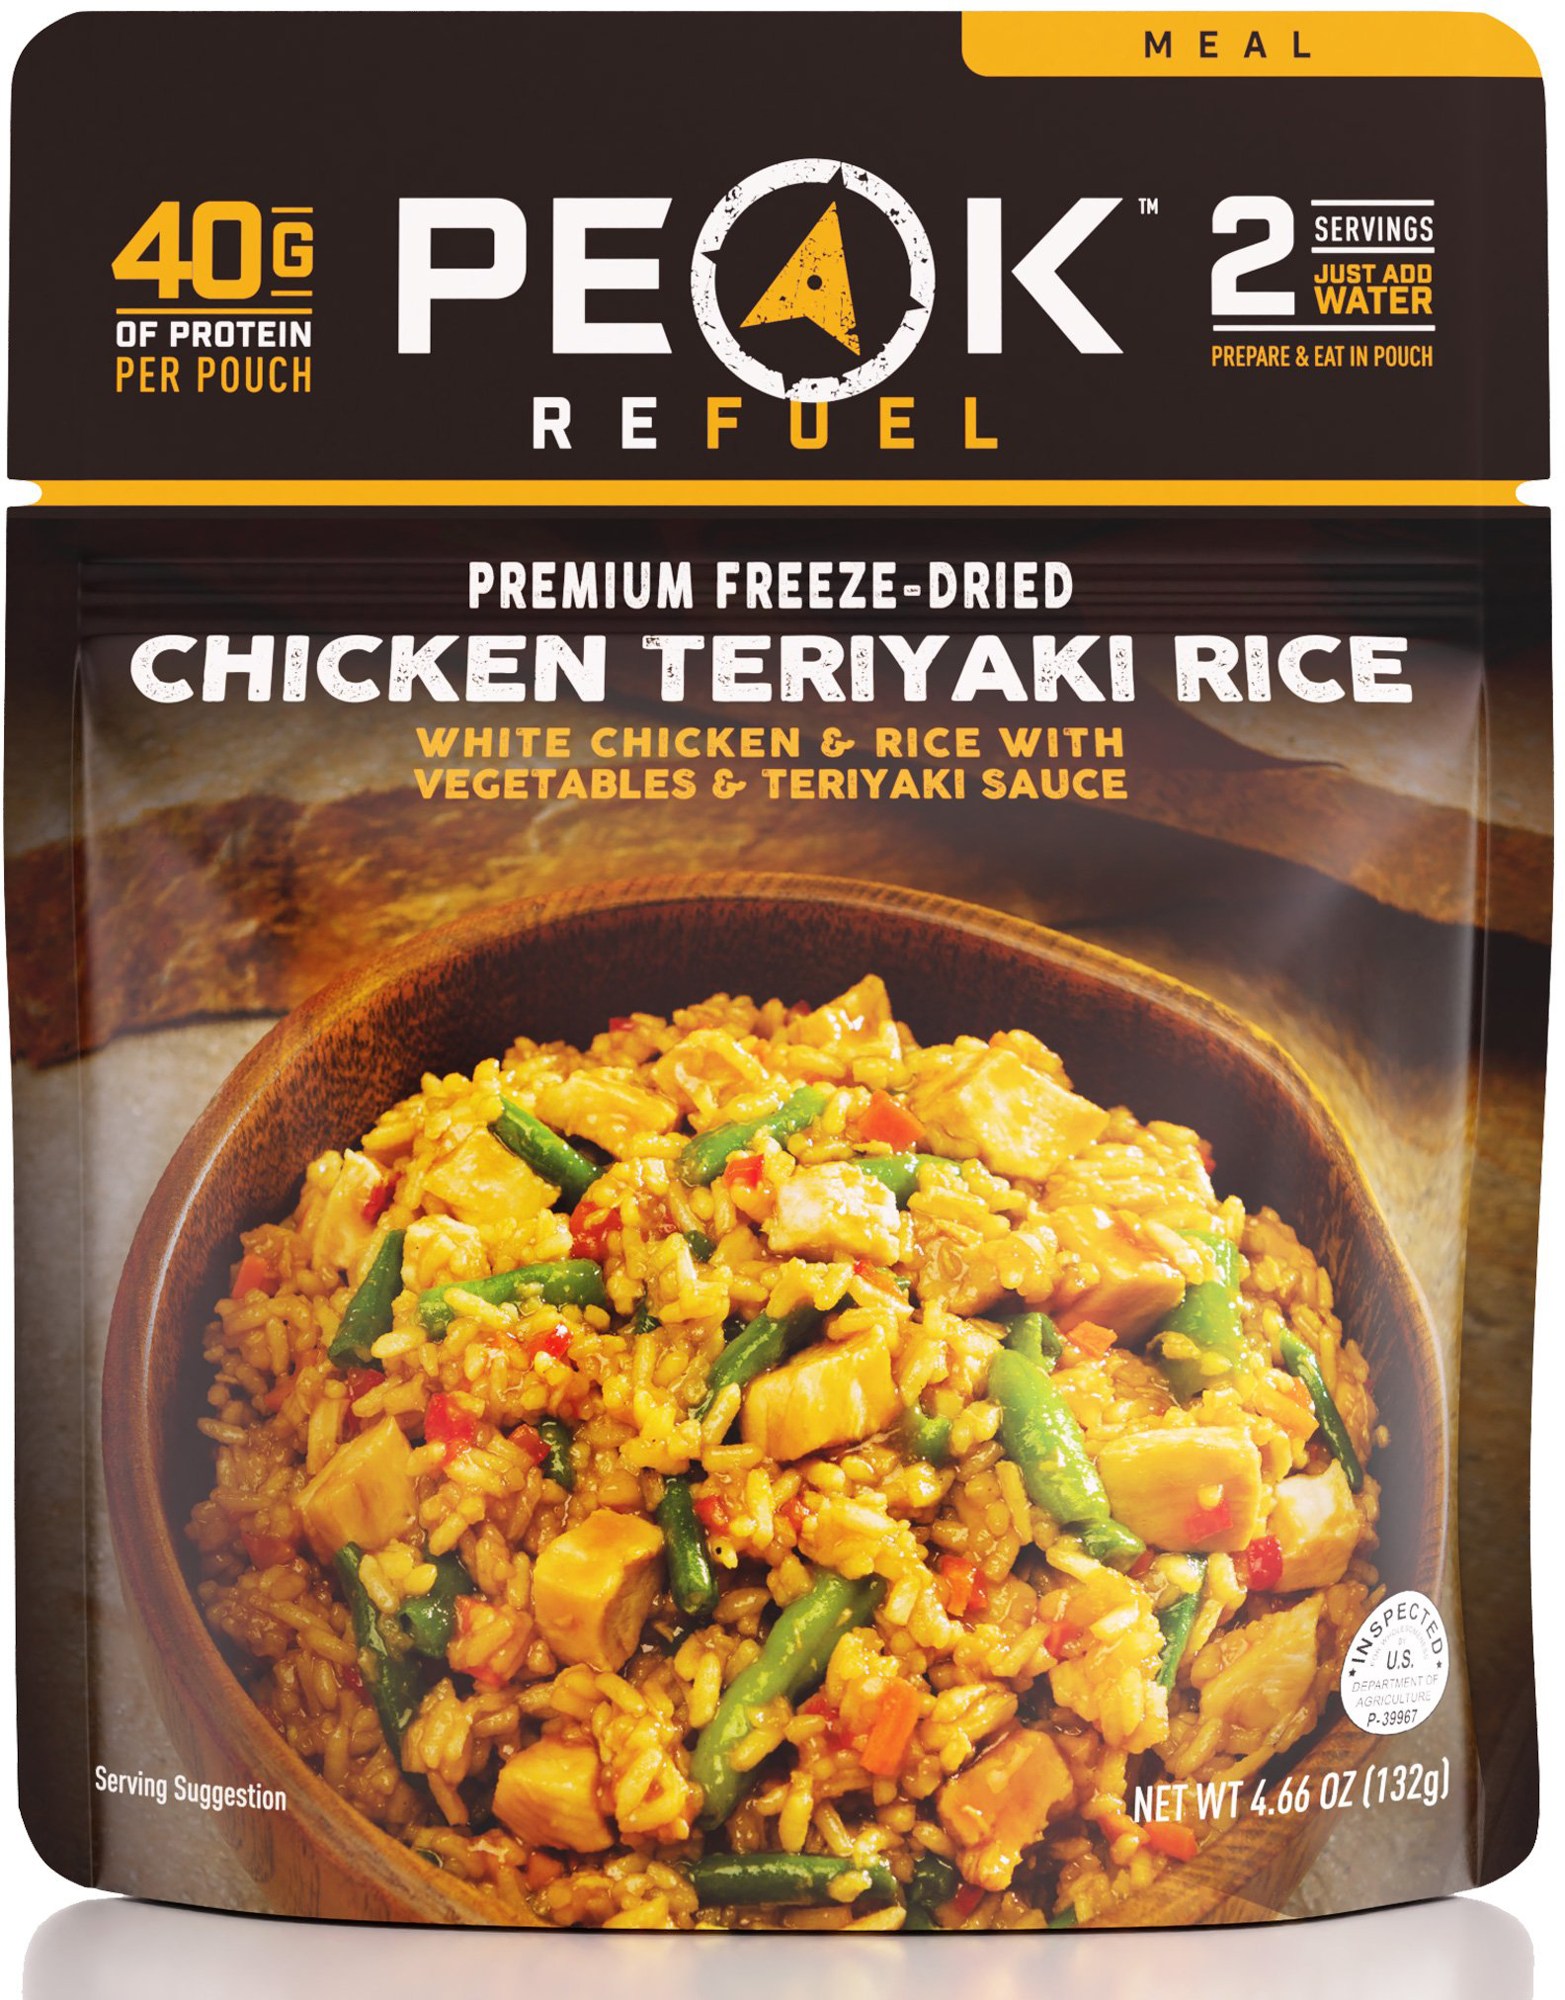 Курица с рисом Терияки – 2 порции PEAK REFUEL